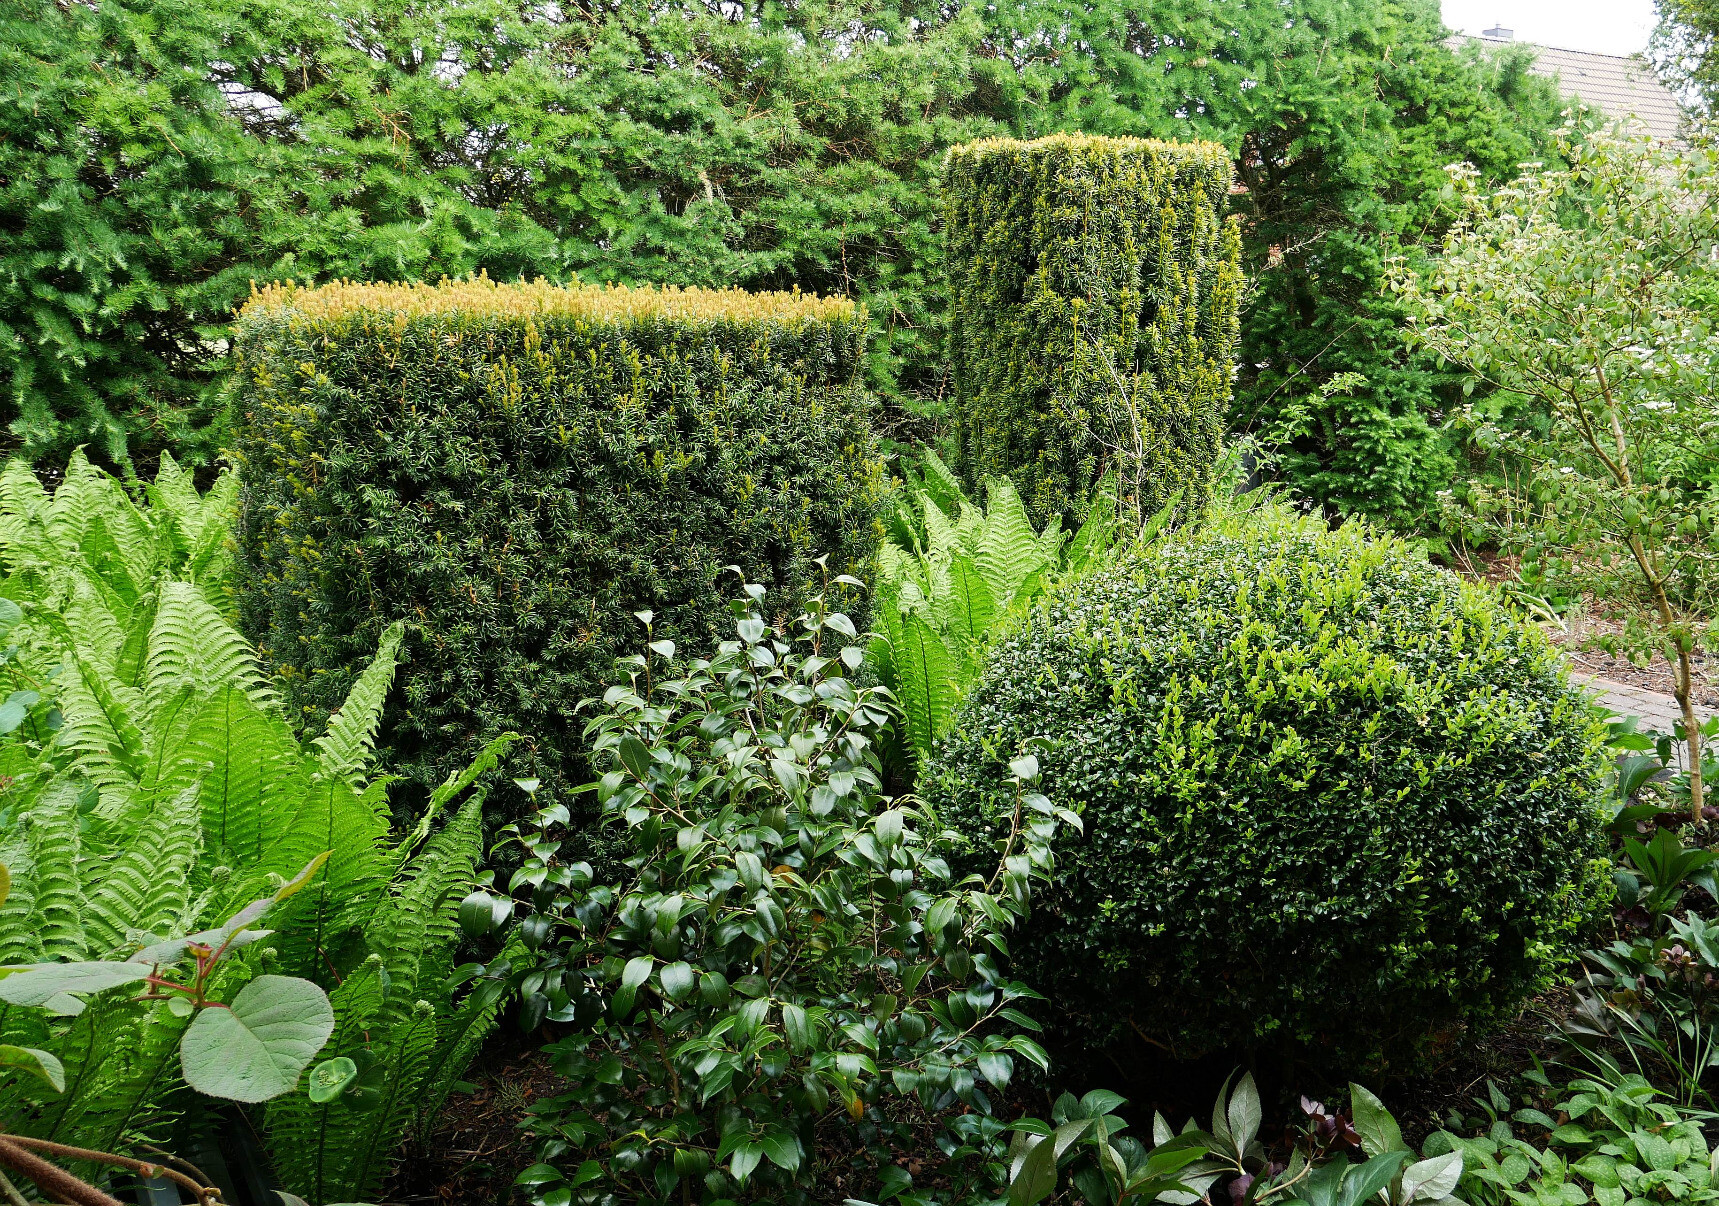 frontgarden with ferns, hellebores, lonicera, kiwi, virburnum, hostas, box, heuchera, yew and larch